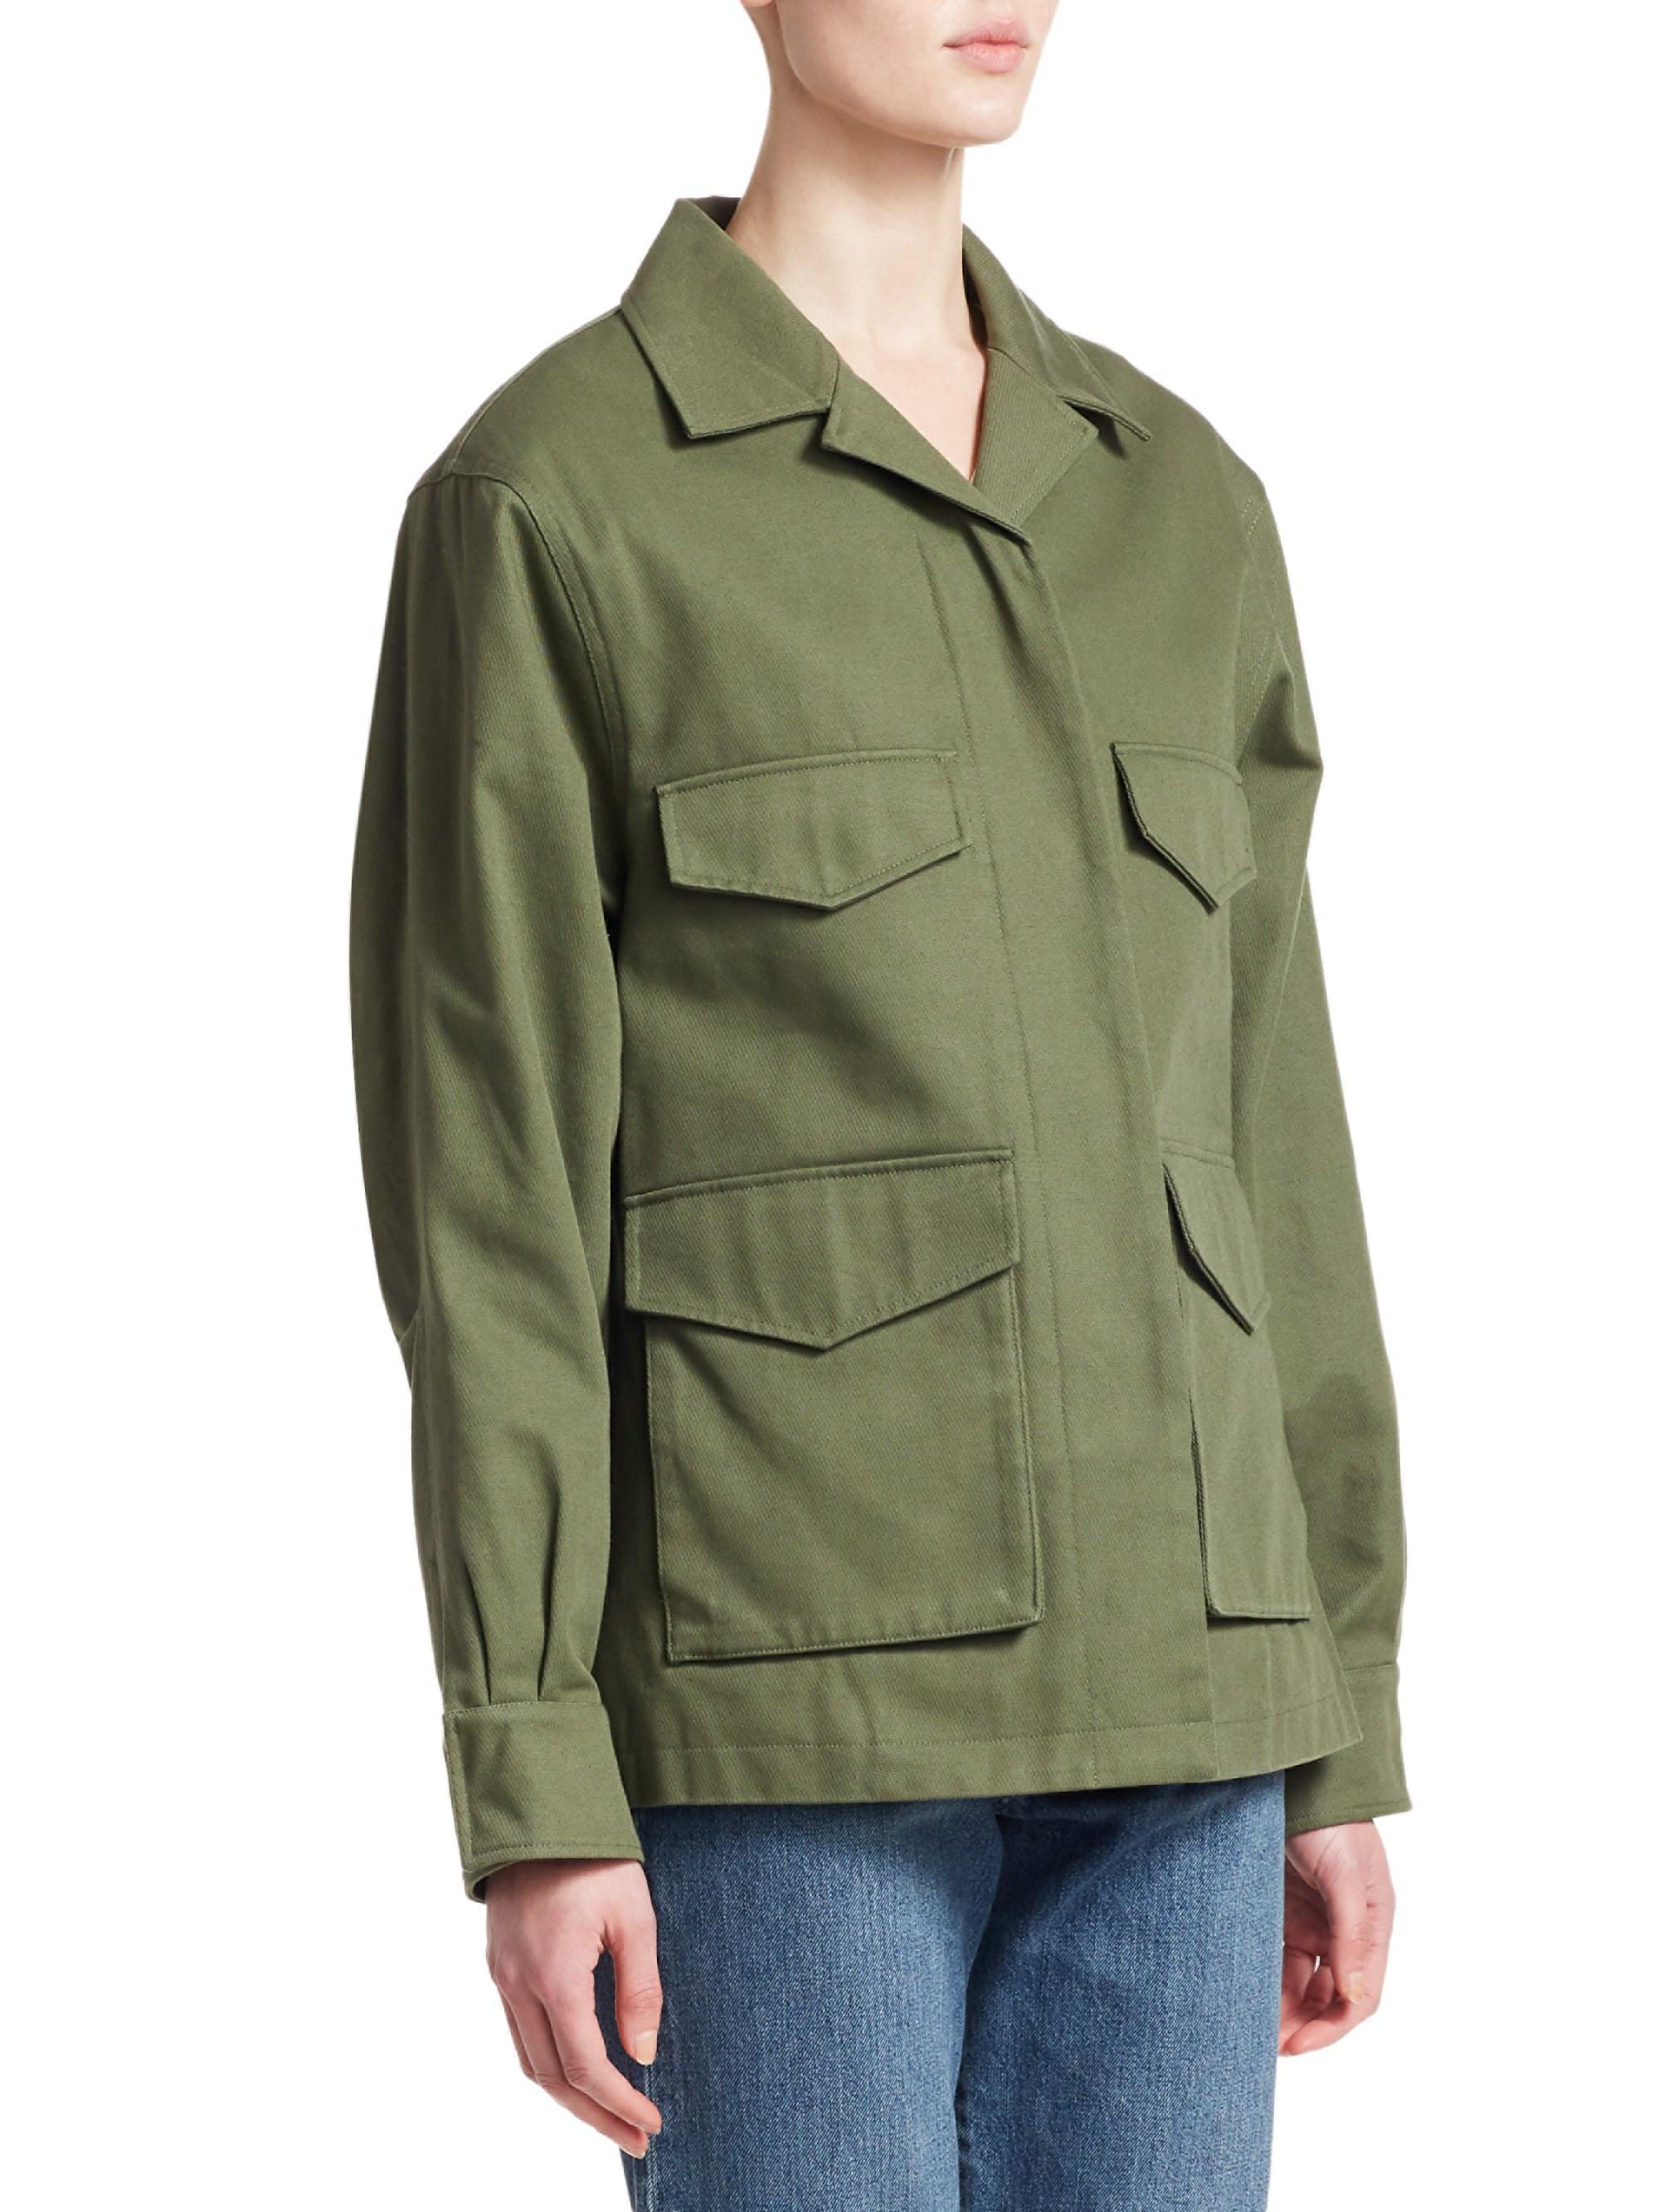 Totême Cotton Avignon Utility Jacket in Olive (Green) - Lyst